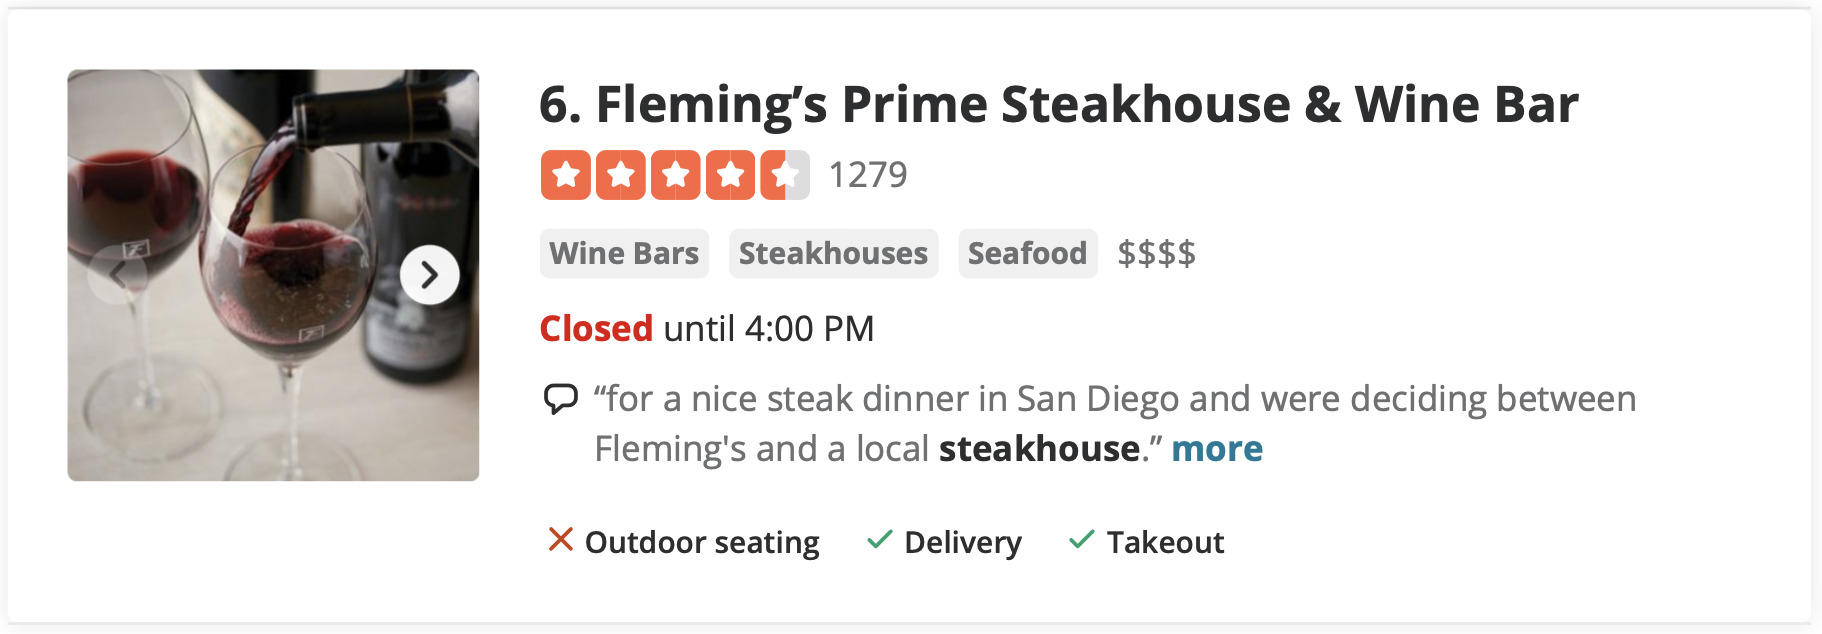 Fleming’s Prime Steakhouse & Wine Bar San Diego